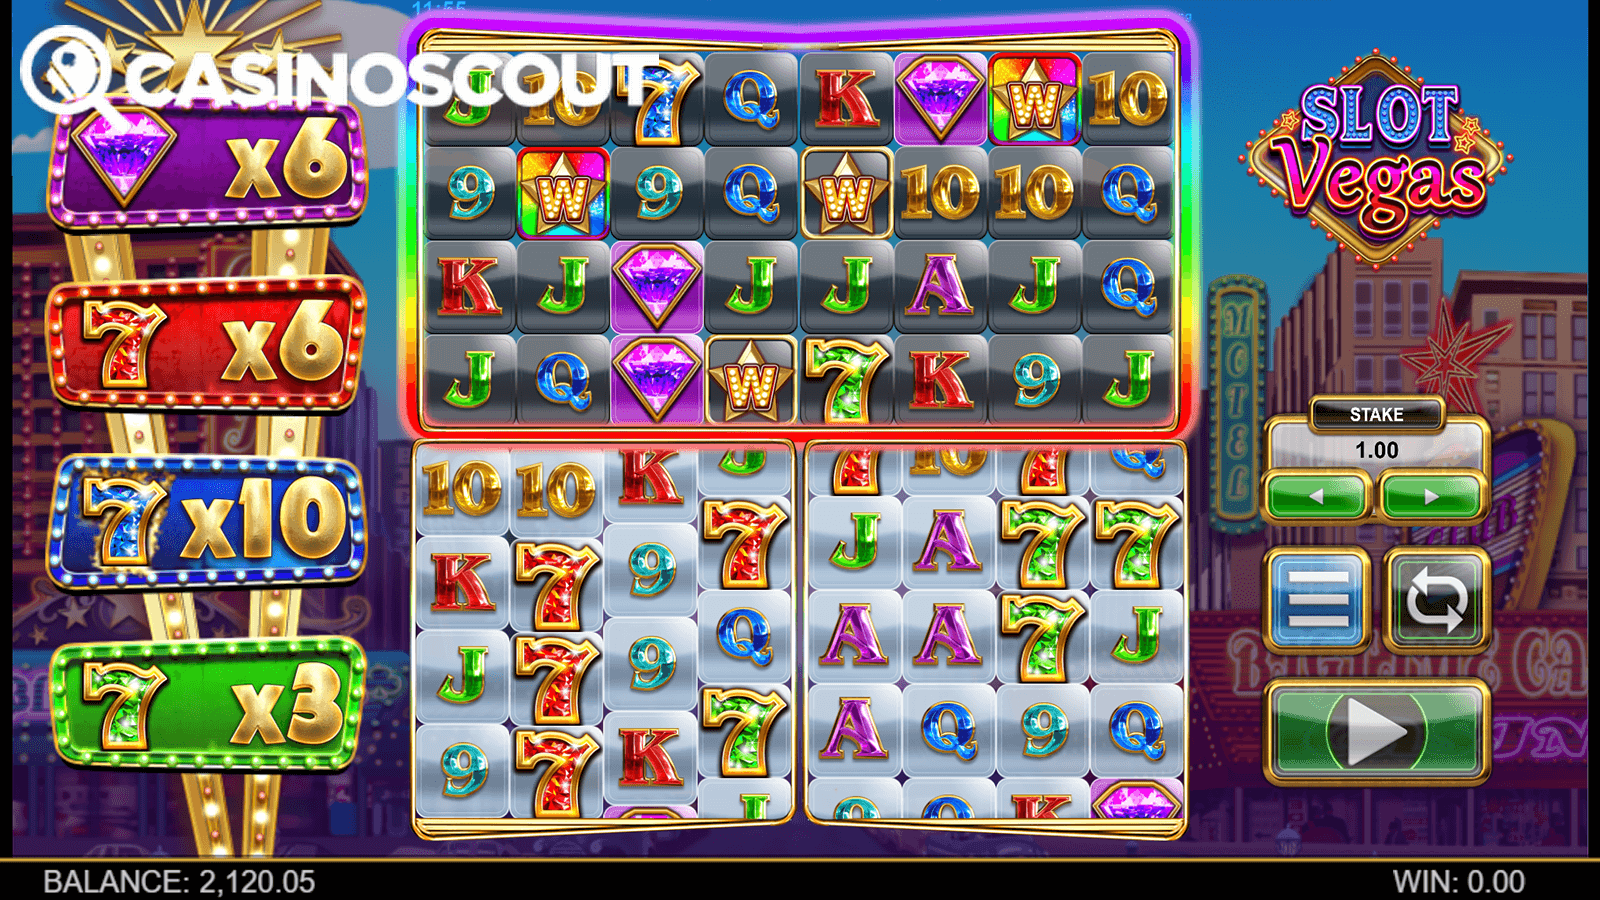 Slot Vegas Megaquads rainbow feature